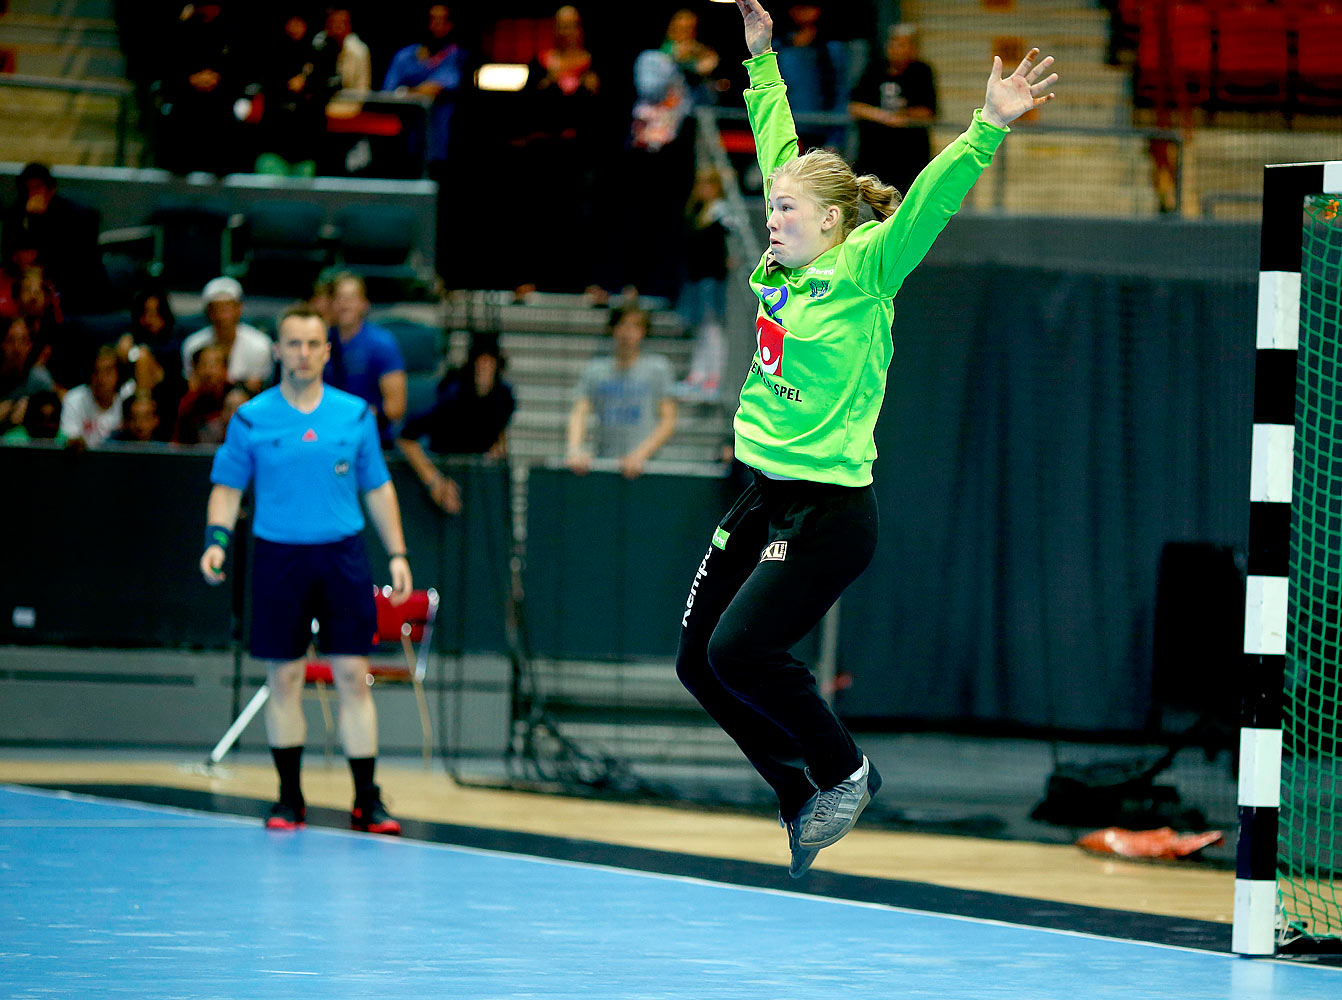 European Open W18 FINAL Denmark-Sweden 33-34,dam,Scandinavium,Göteborg,Sverige,Handboll,,2016,138736